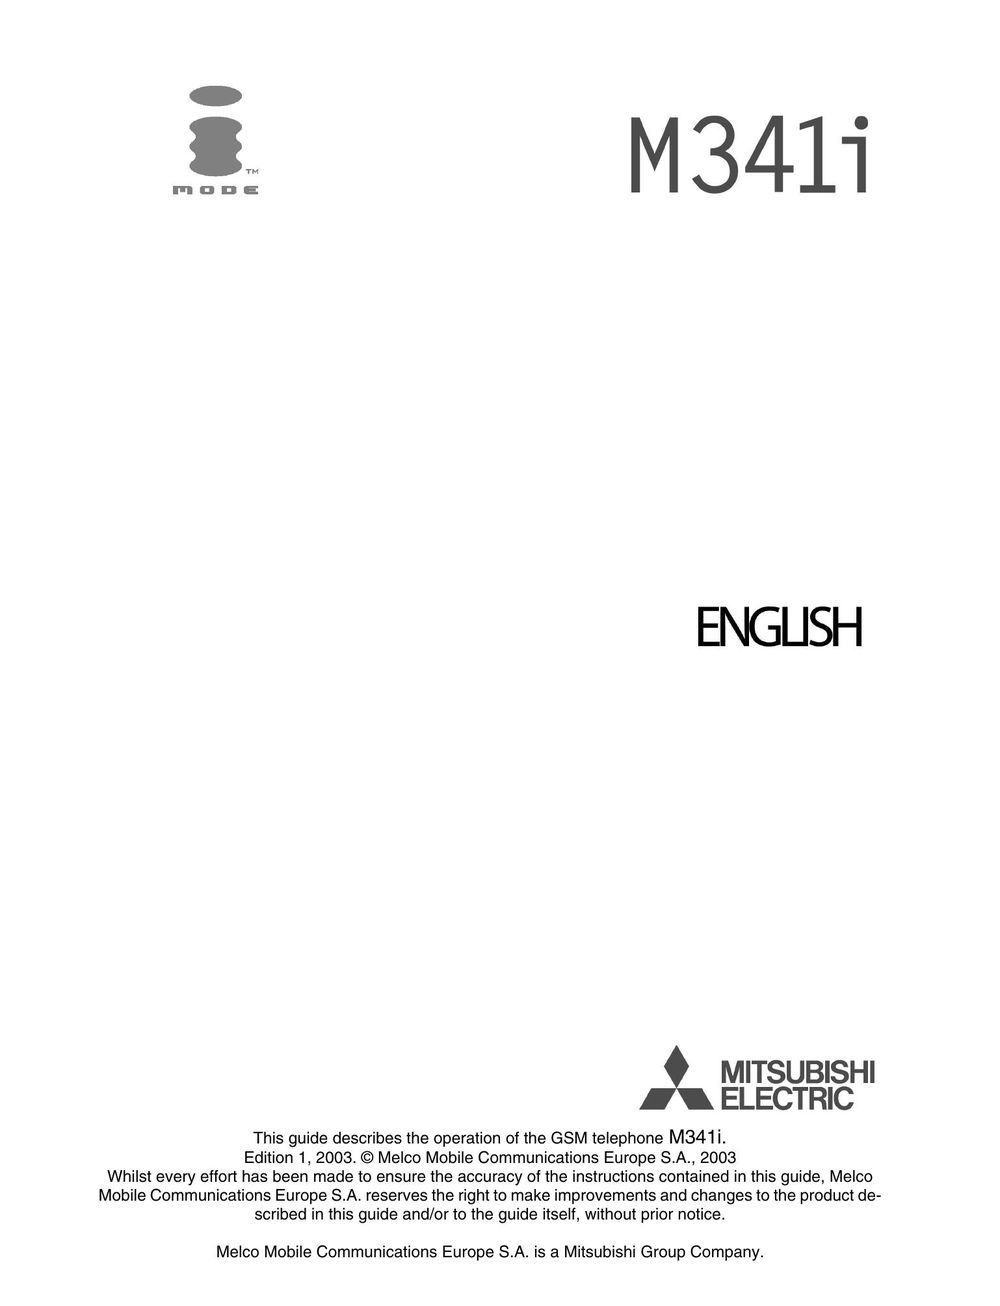 Mitsubishi Electronics M341i Cell Phone User Manual